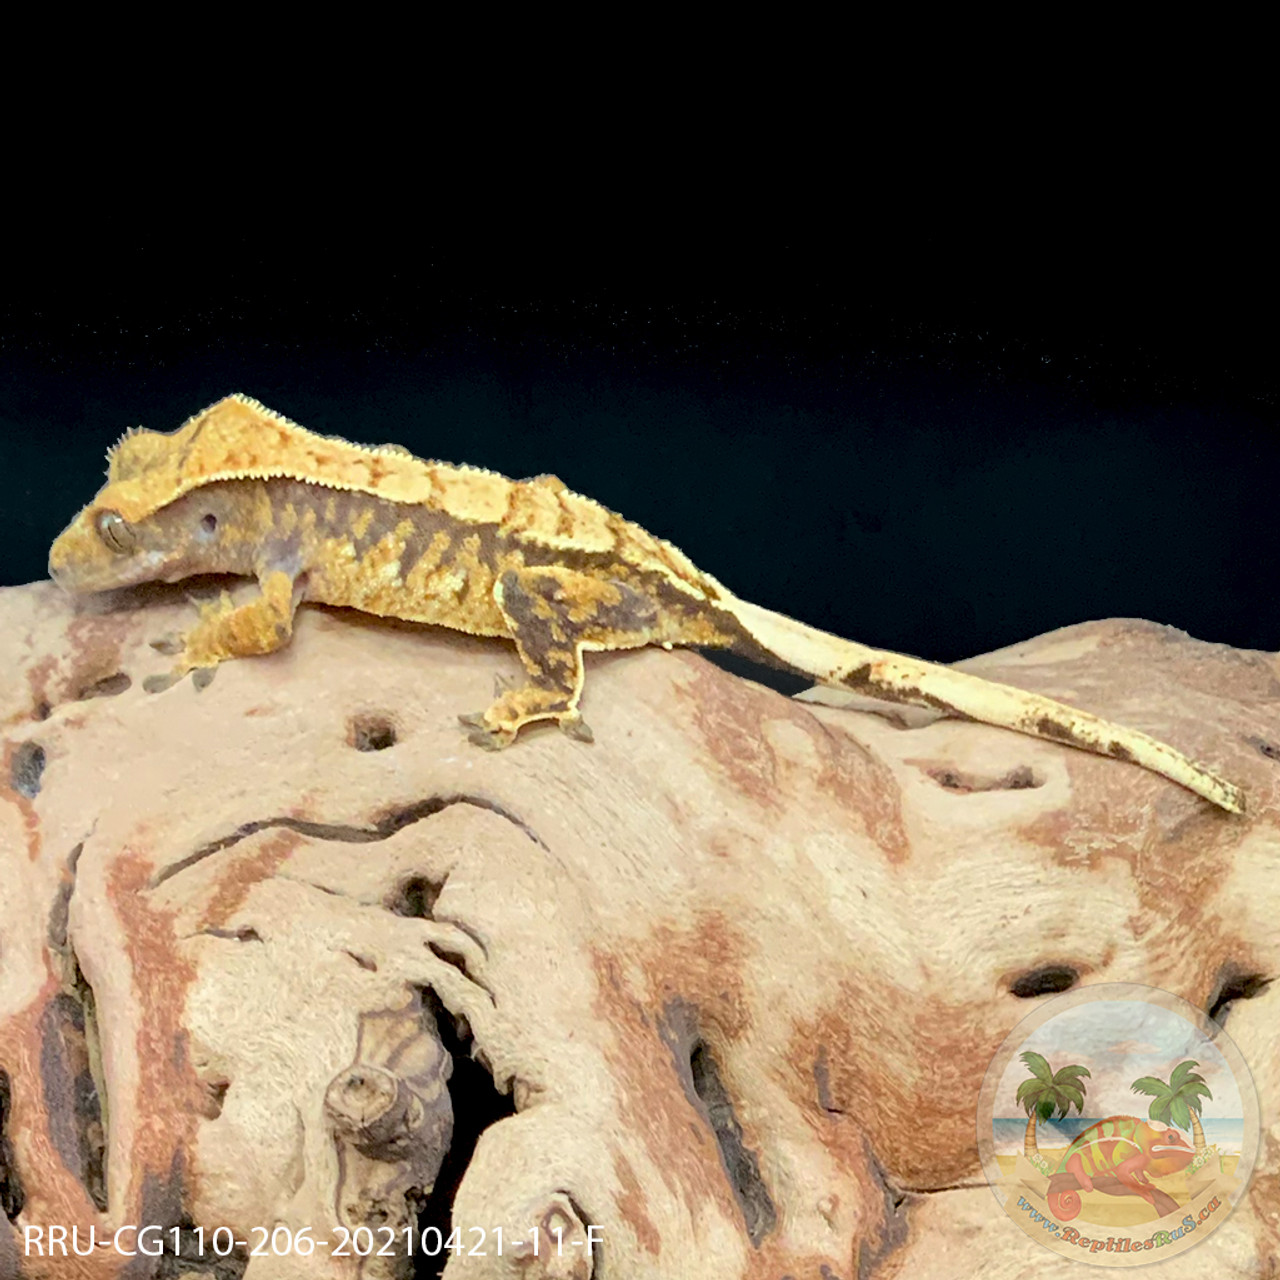 Crested Gecko - 11g - Female